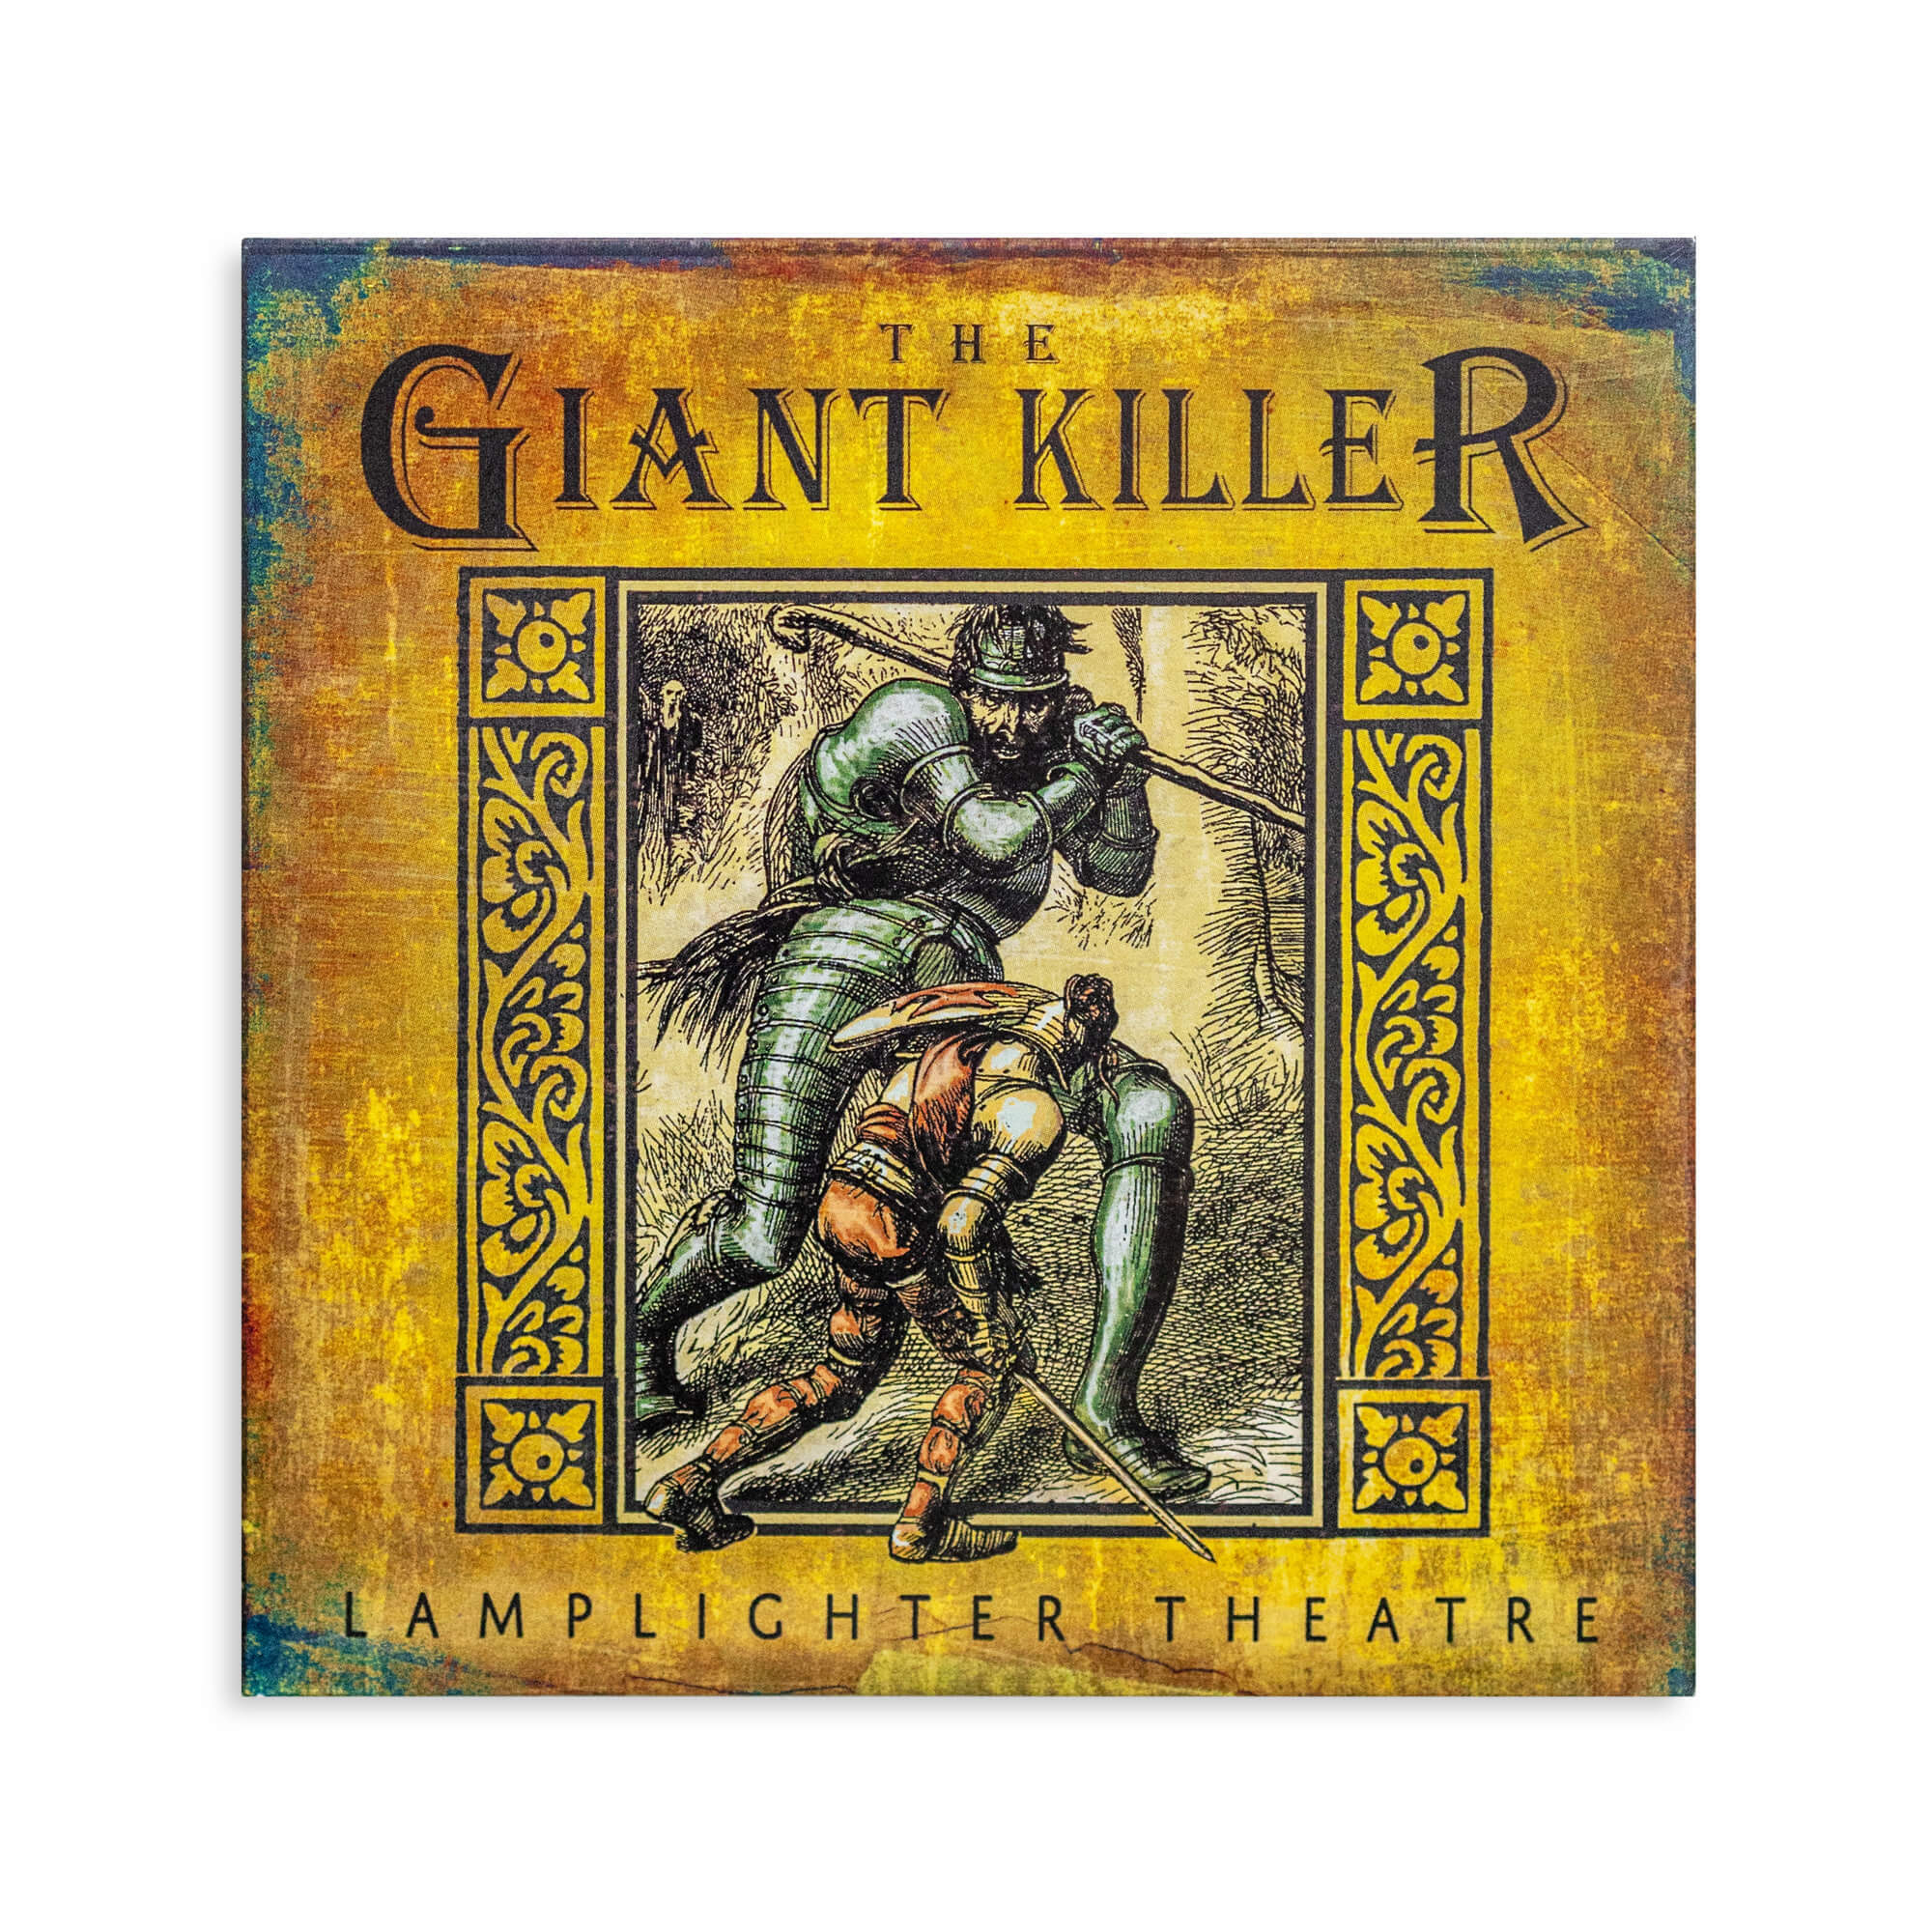 The Giant Killer Audio Drama CD